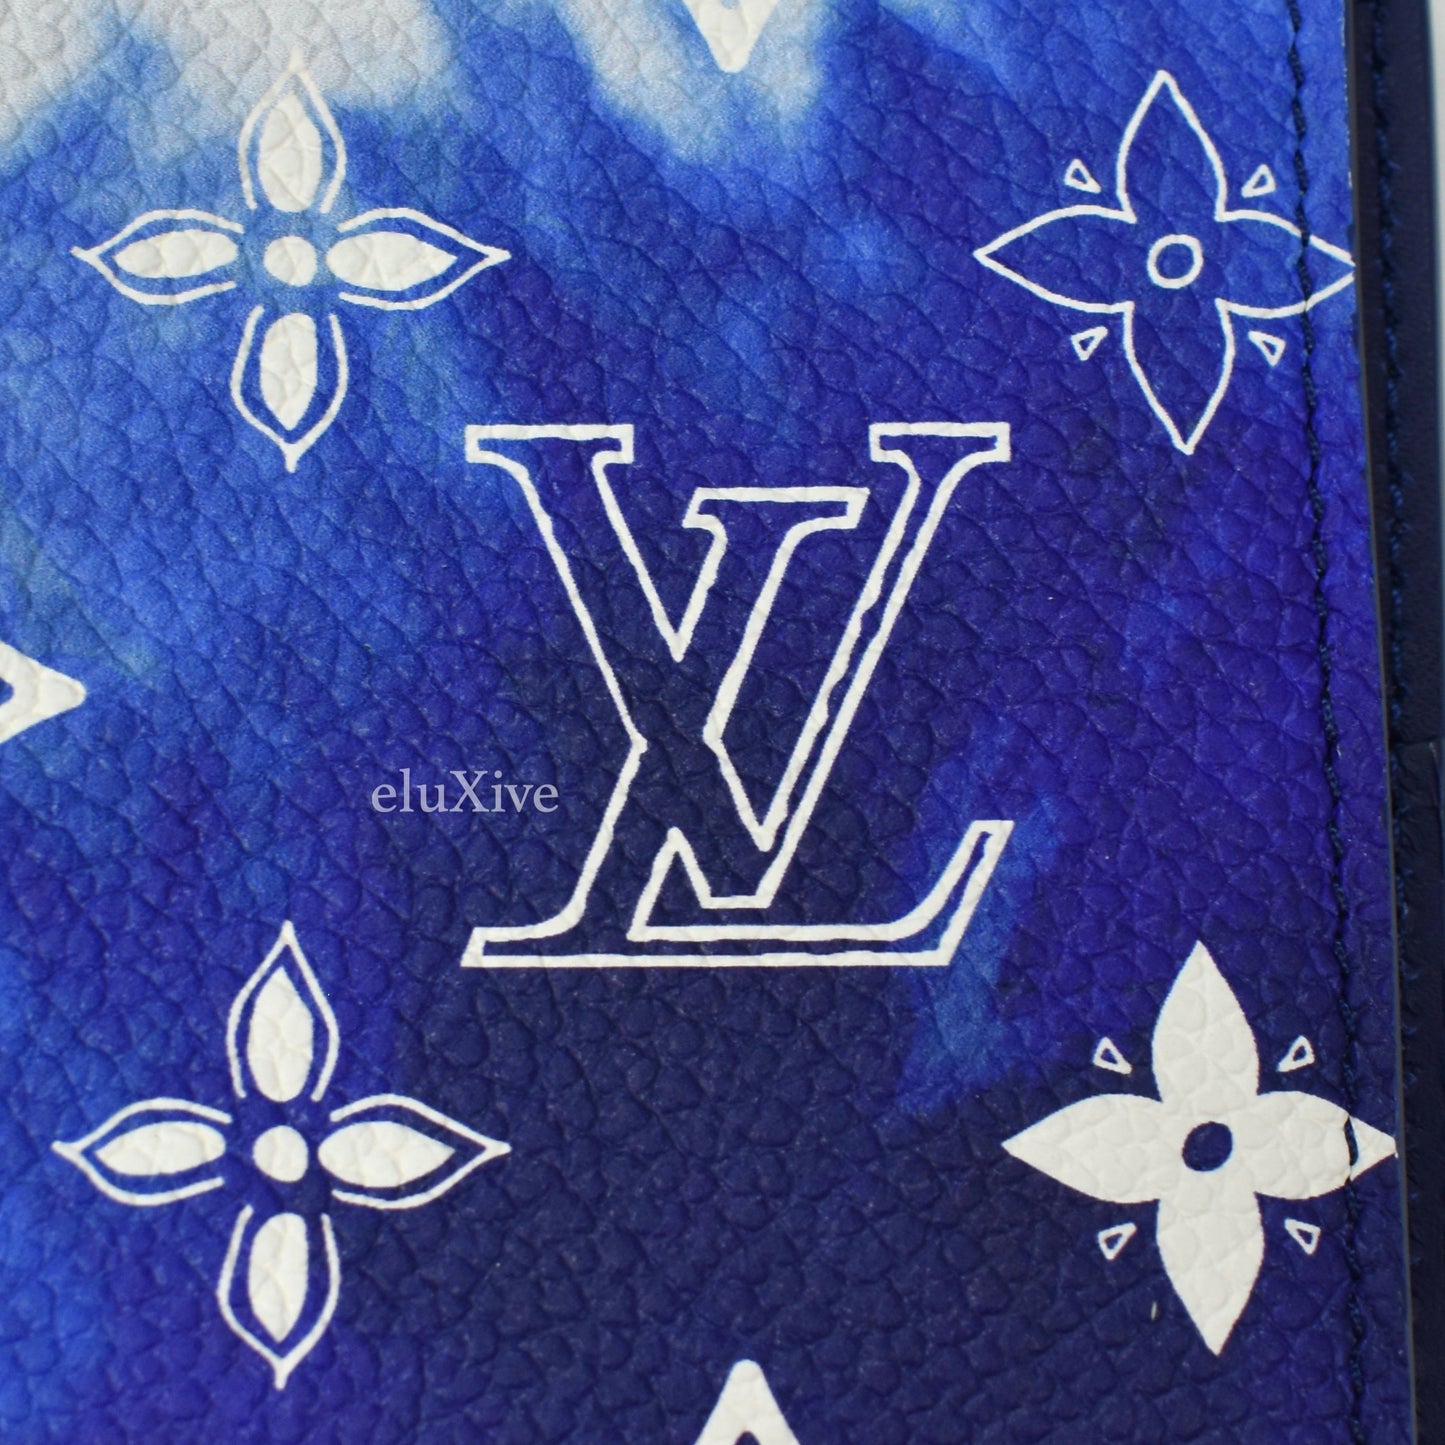 Louis Vuitton - Bandana Monogram Leather Slender Wallet